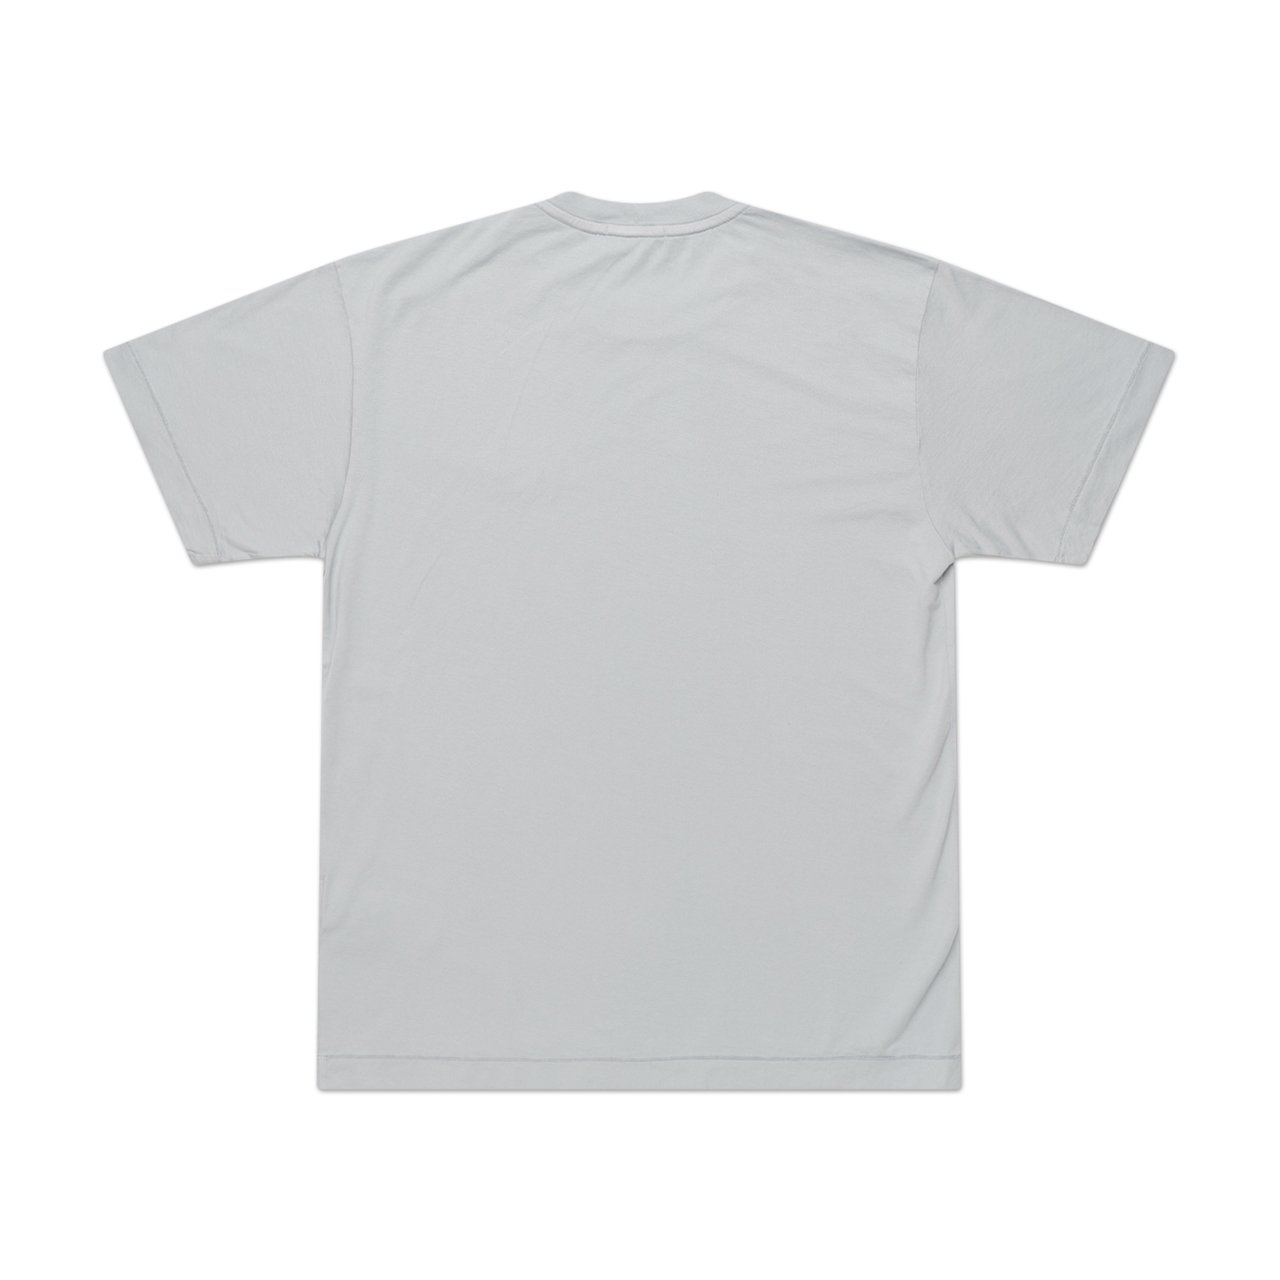 stone island stone island cotton t-shirt (grey)